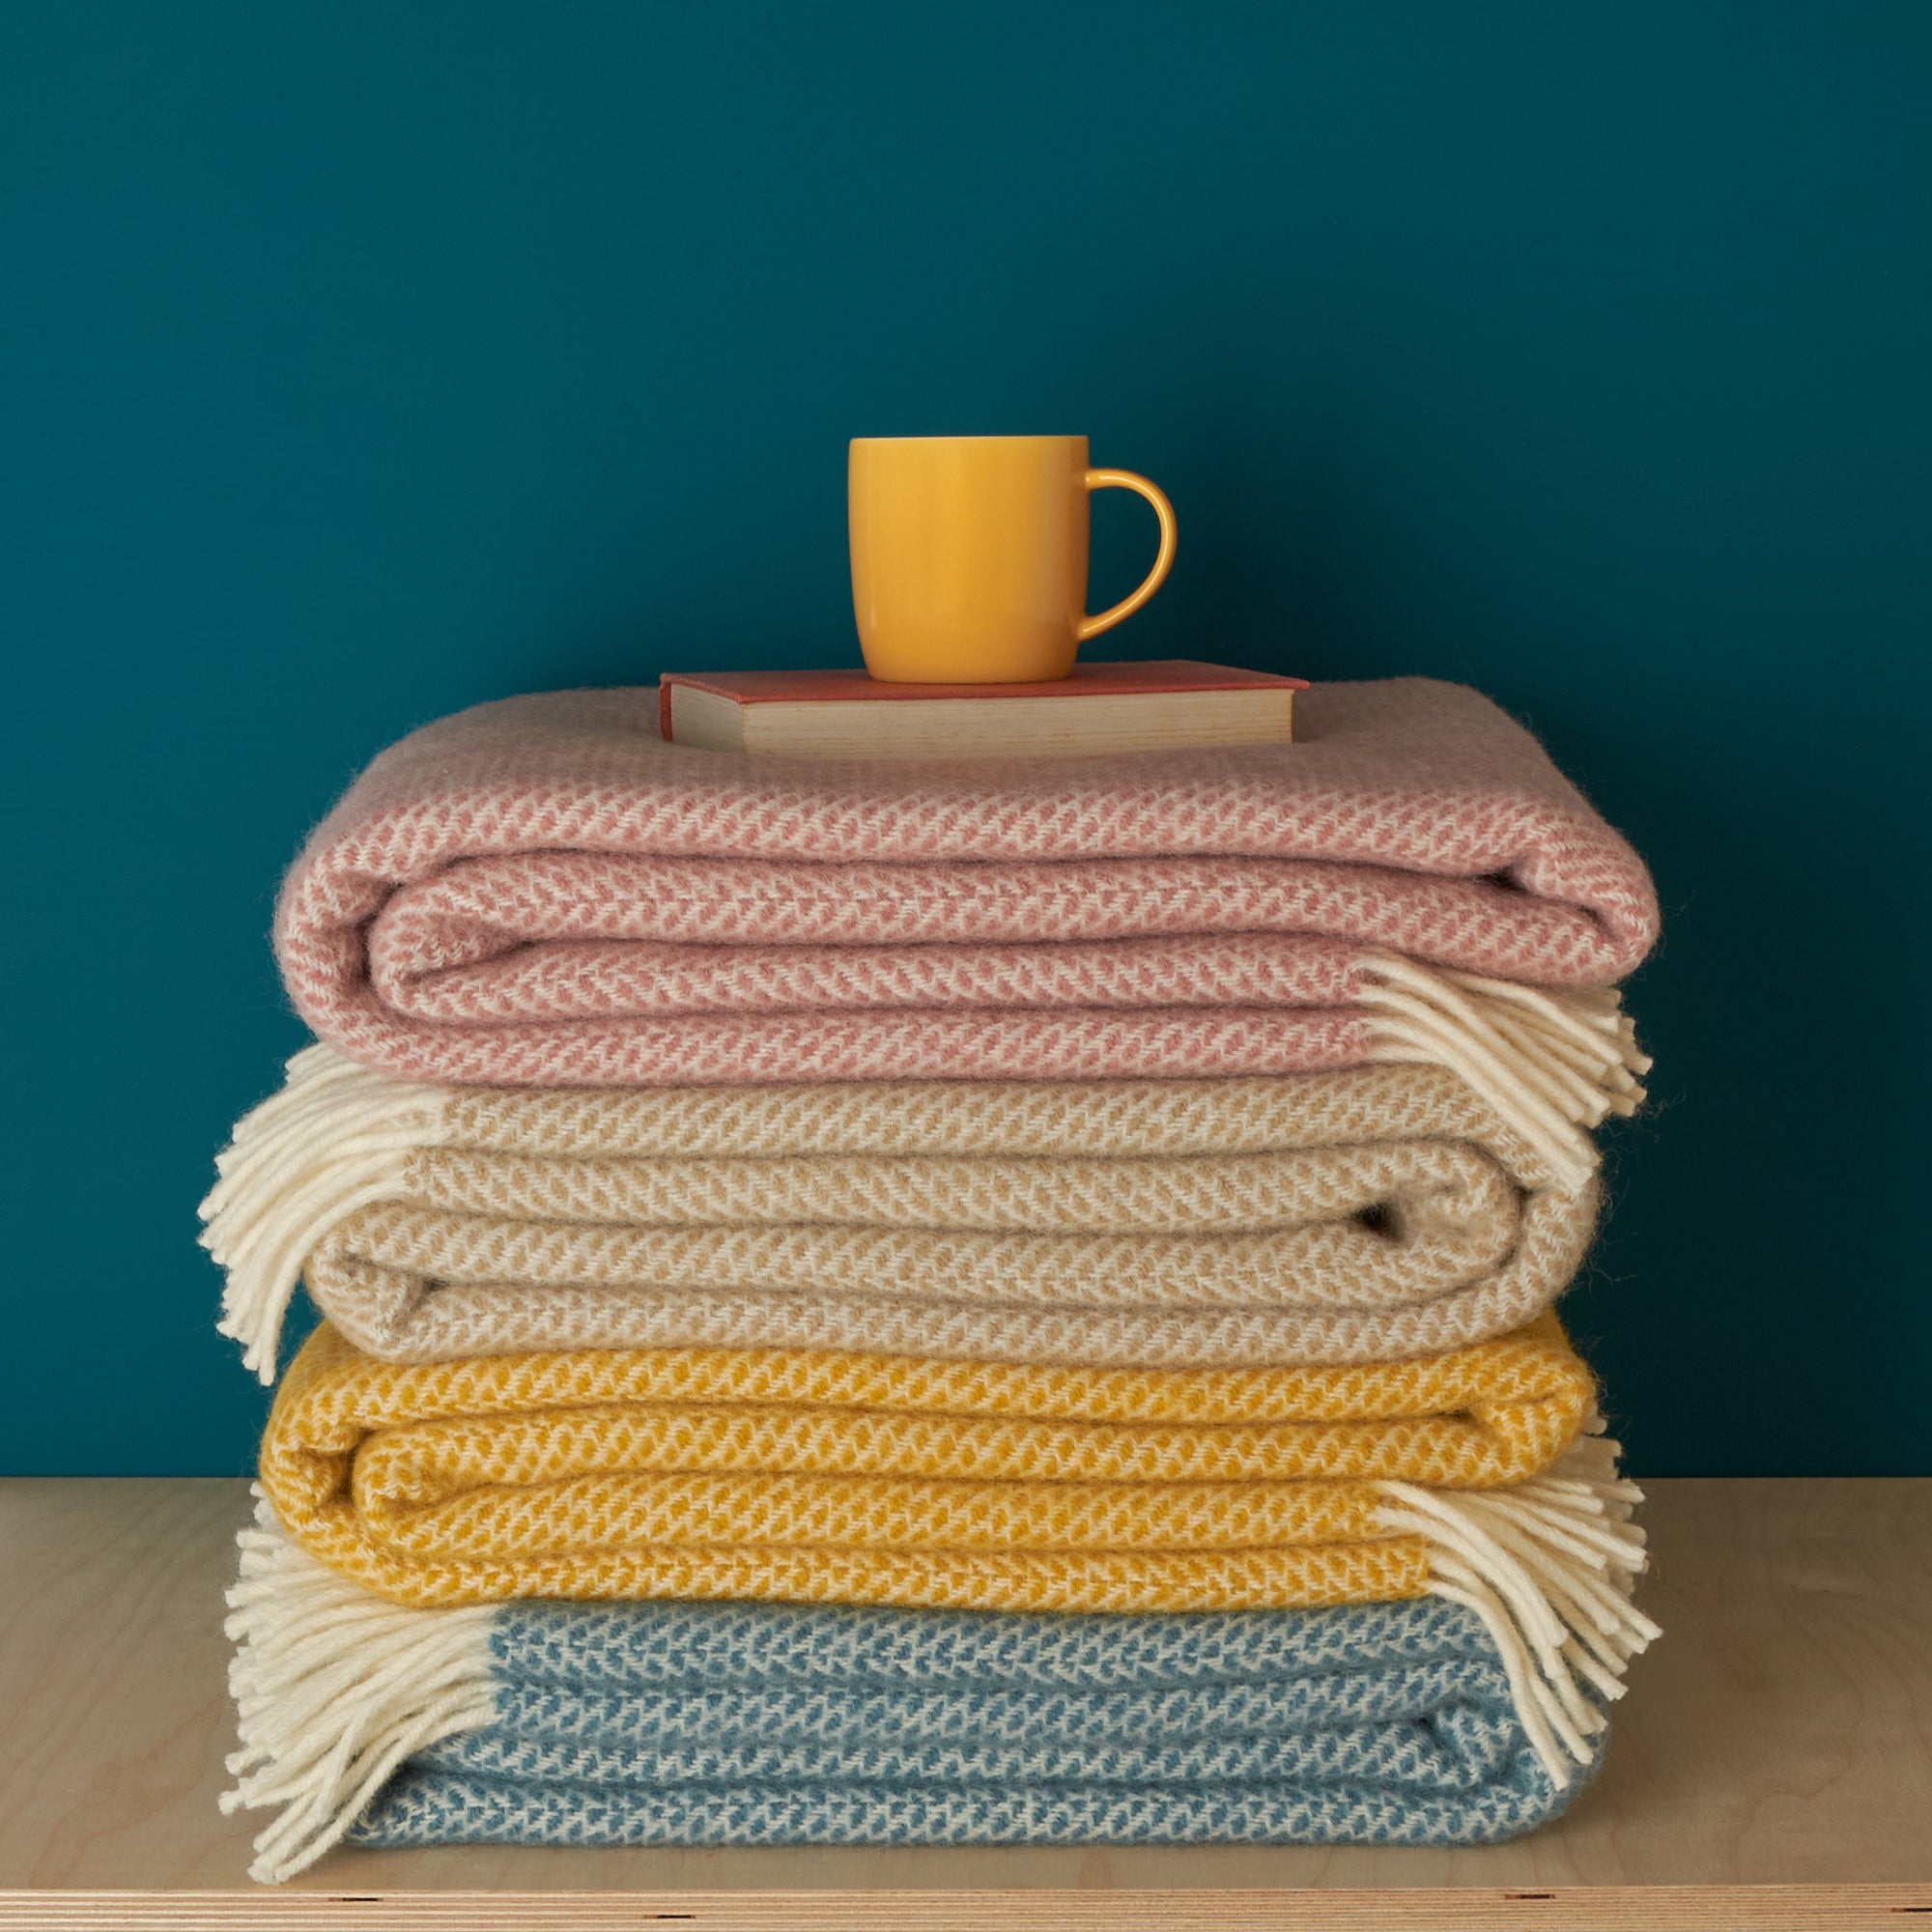 10 Great Reasons to Buy a Wool Blanket Throw